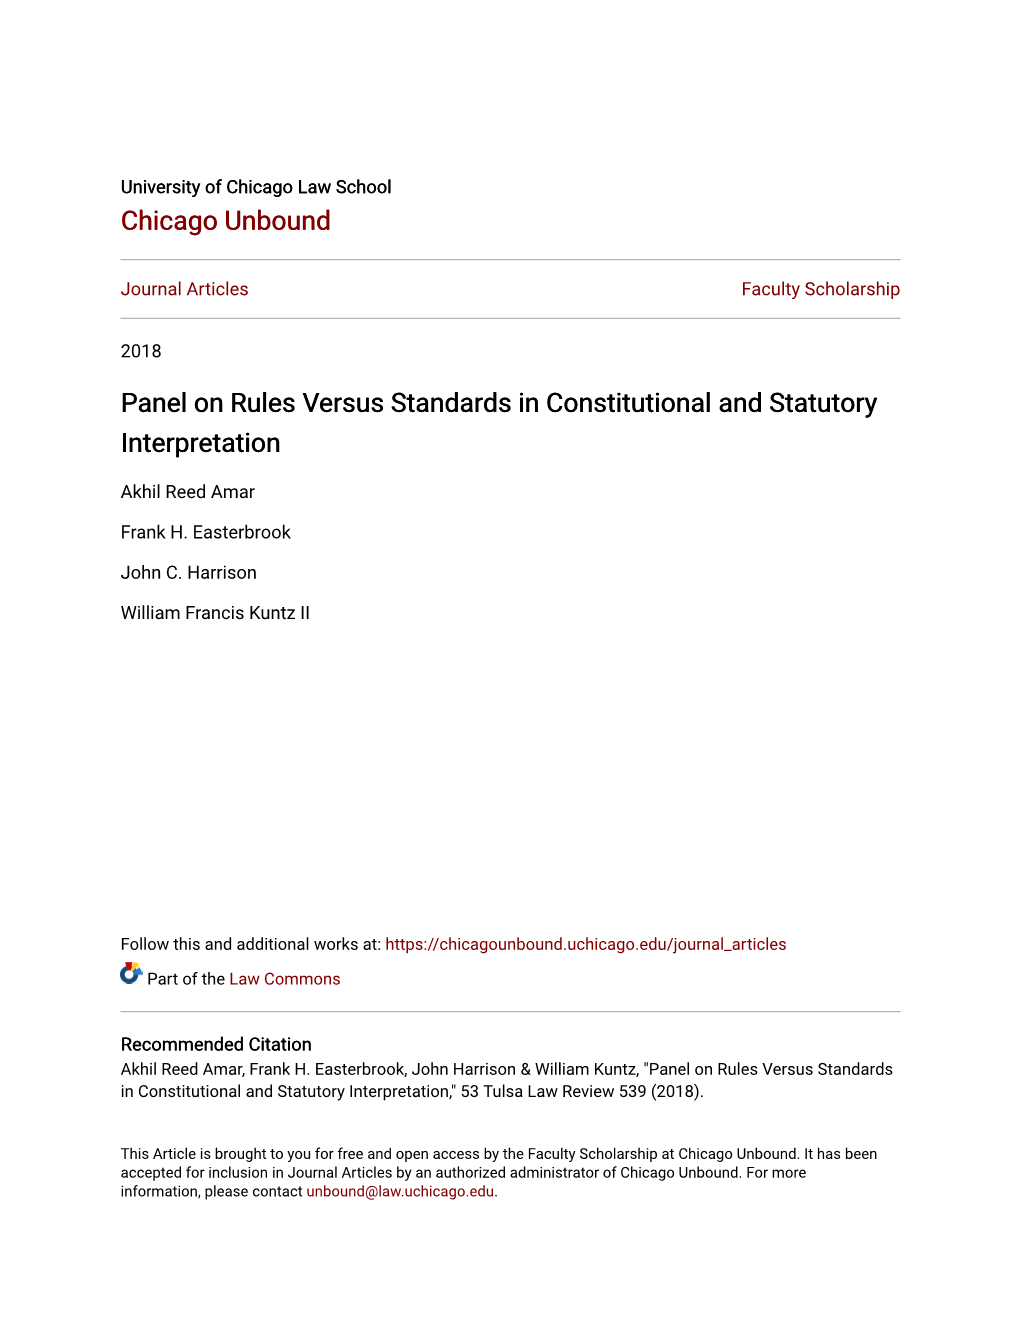 Panel on Rules Versus Standards in Constitutional and Statutory Interpretation